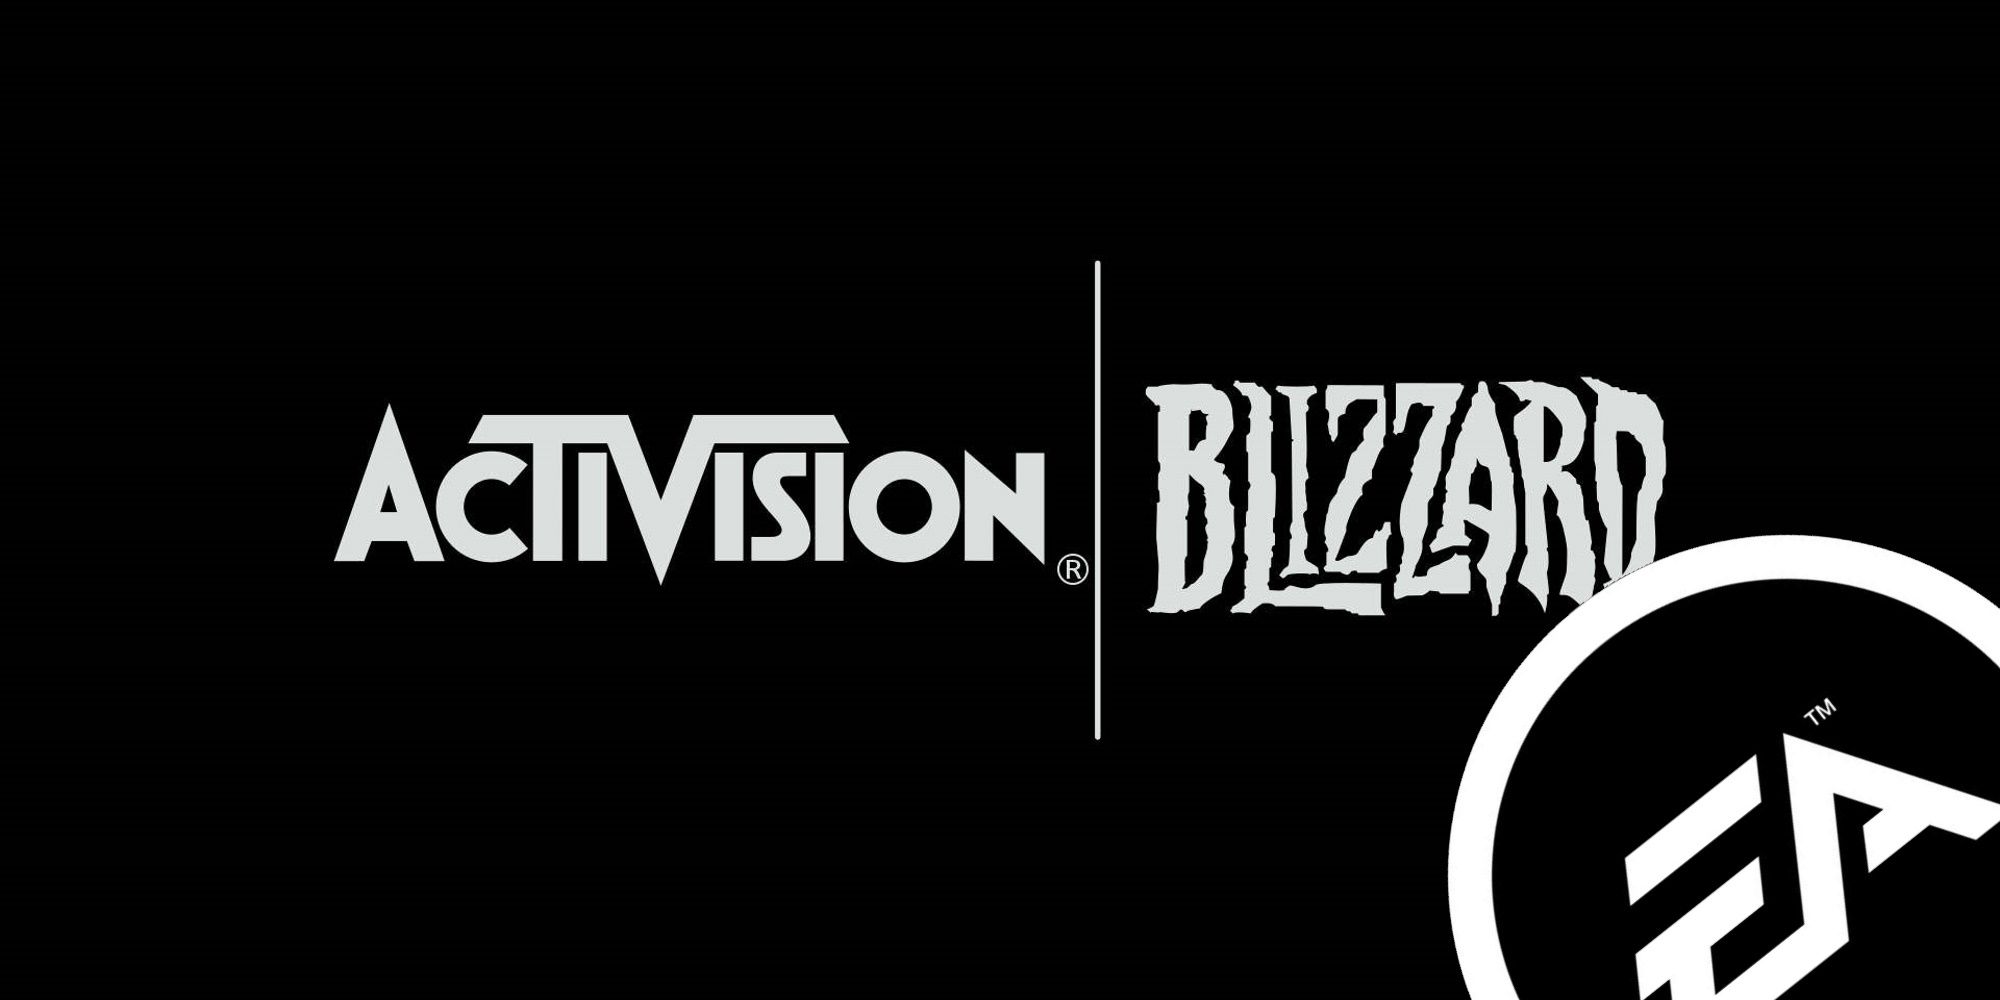 EA Activision Blizzard